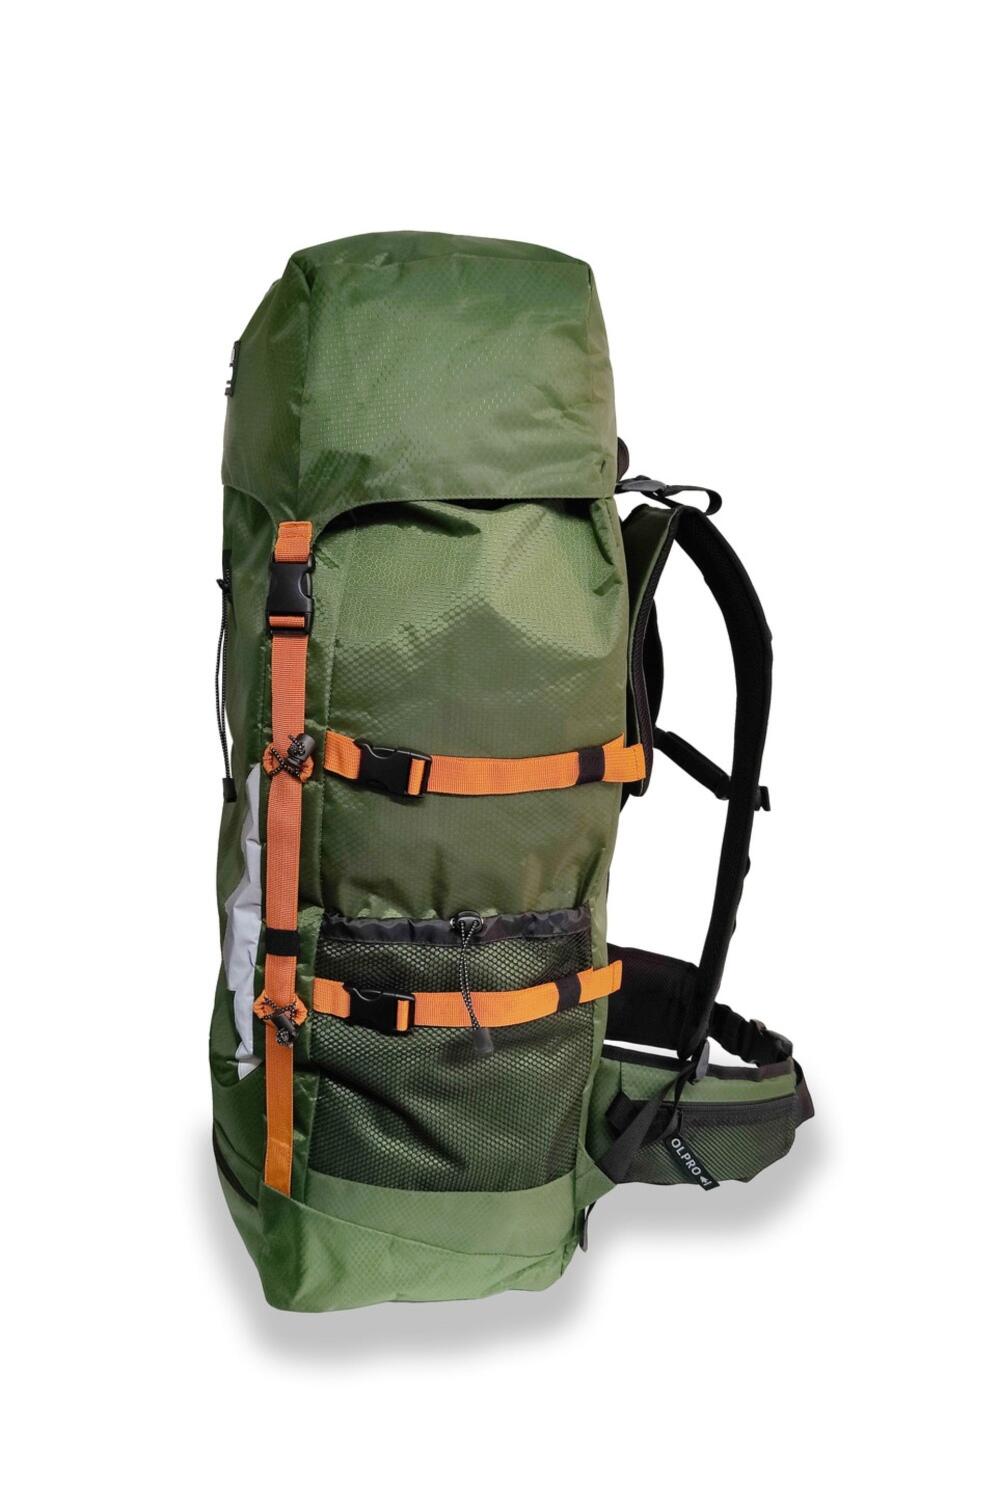 OLPRO 80L Rucksack Bag Green 5/5